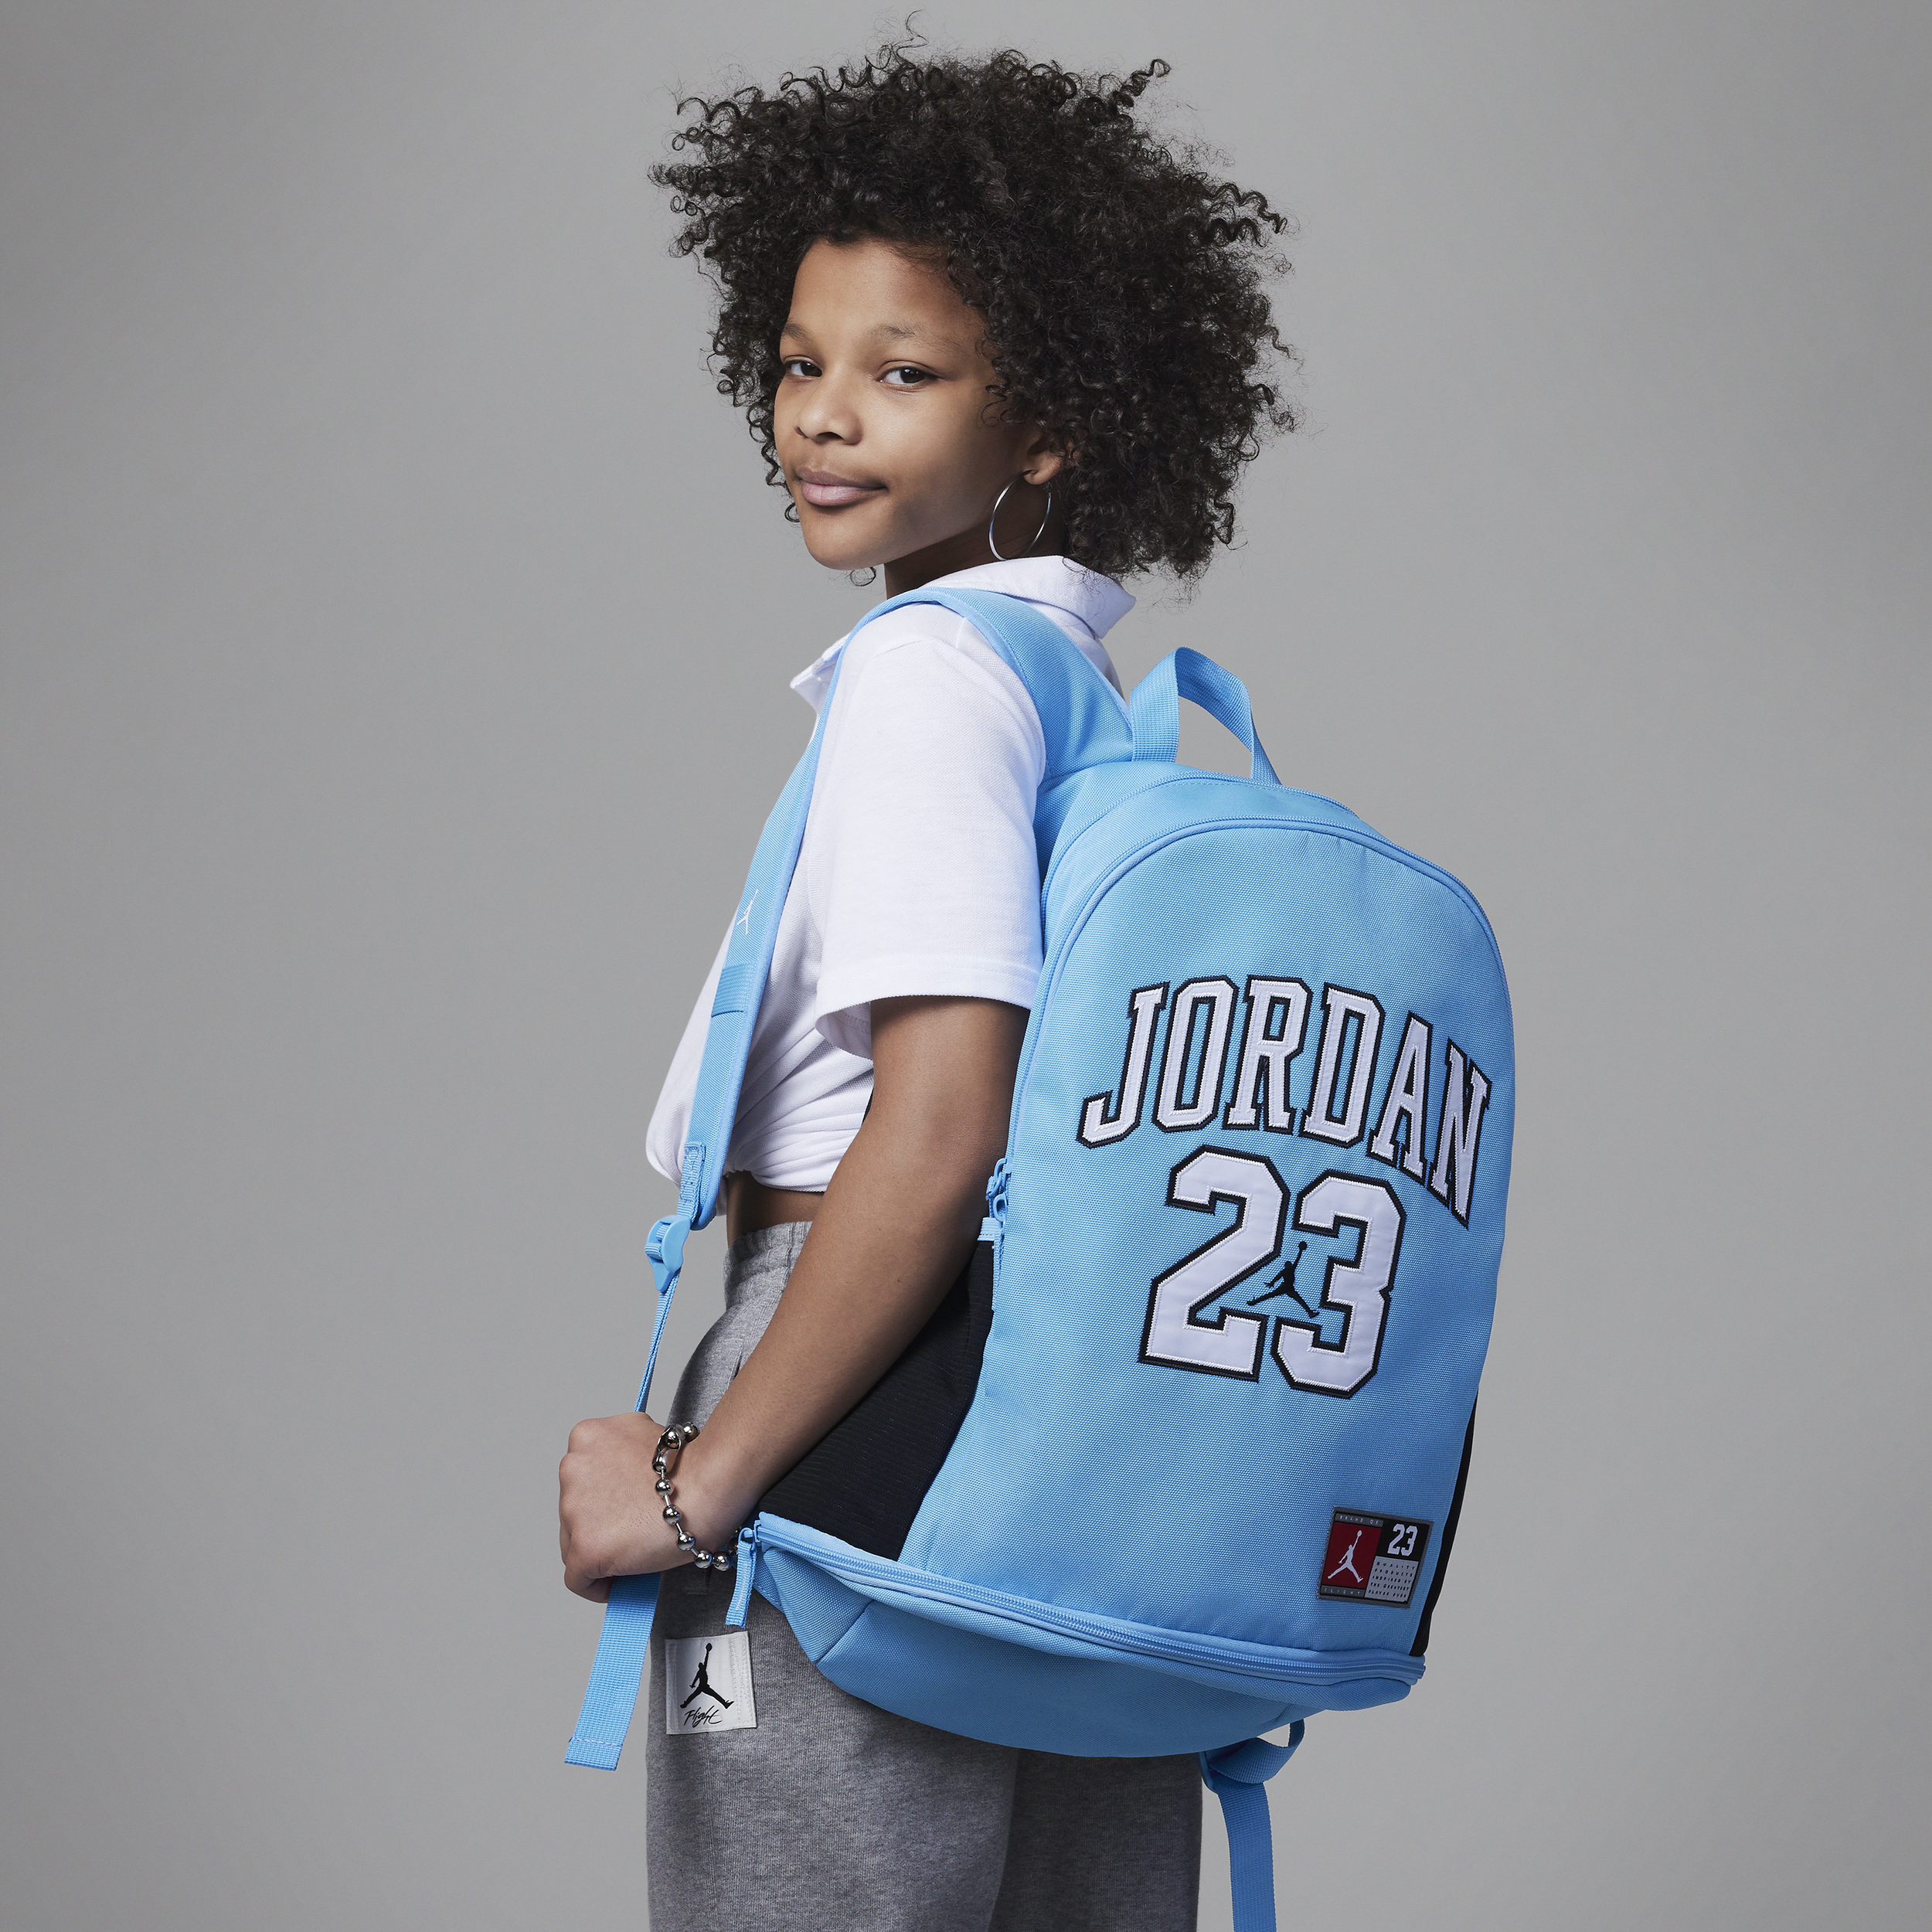 Jordan Jersey Backpack Mochila - Niño/a (27 l) - Azul